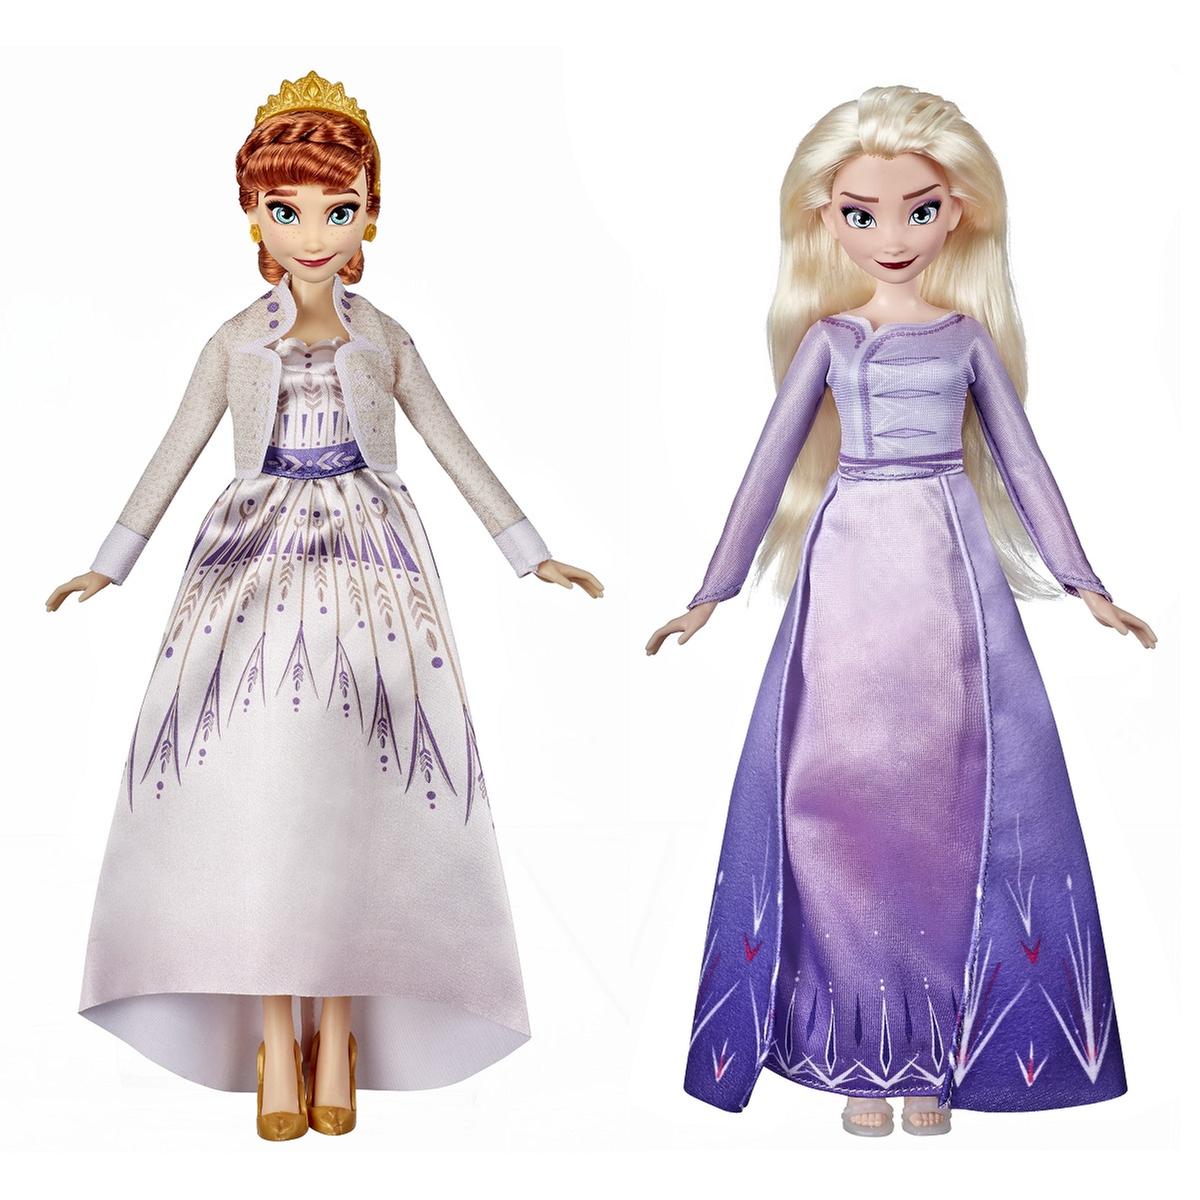 Disney-Frozen 2 Conjunto de Boneca Princesa com Acessórios, Elsa e Anna,  Conjuntos Opa, Brinquedos para Meninas